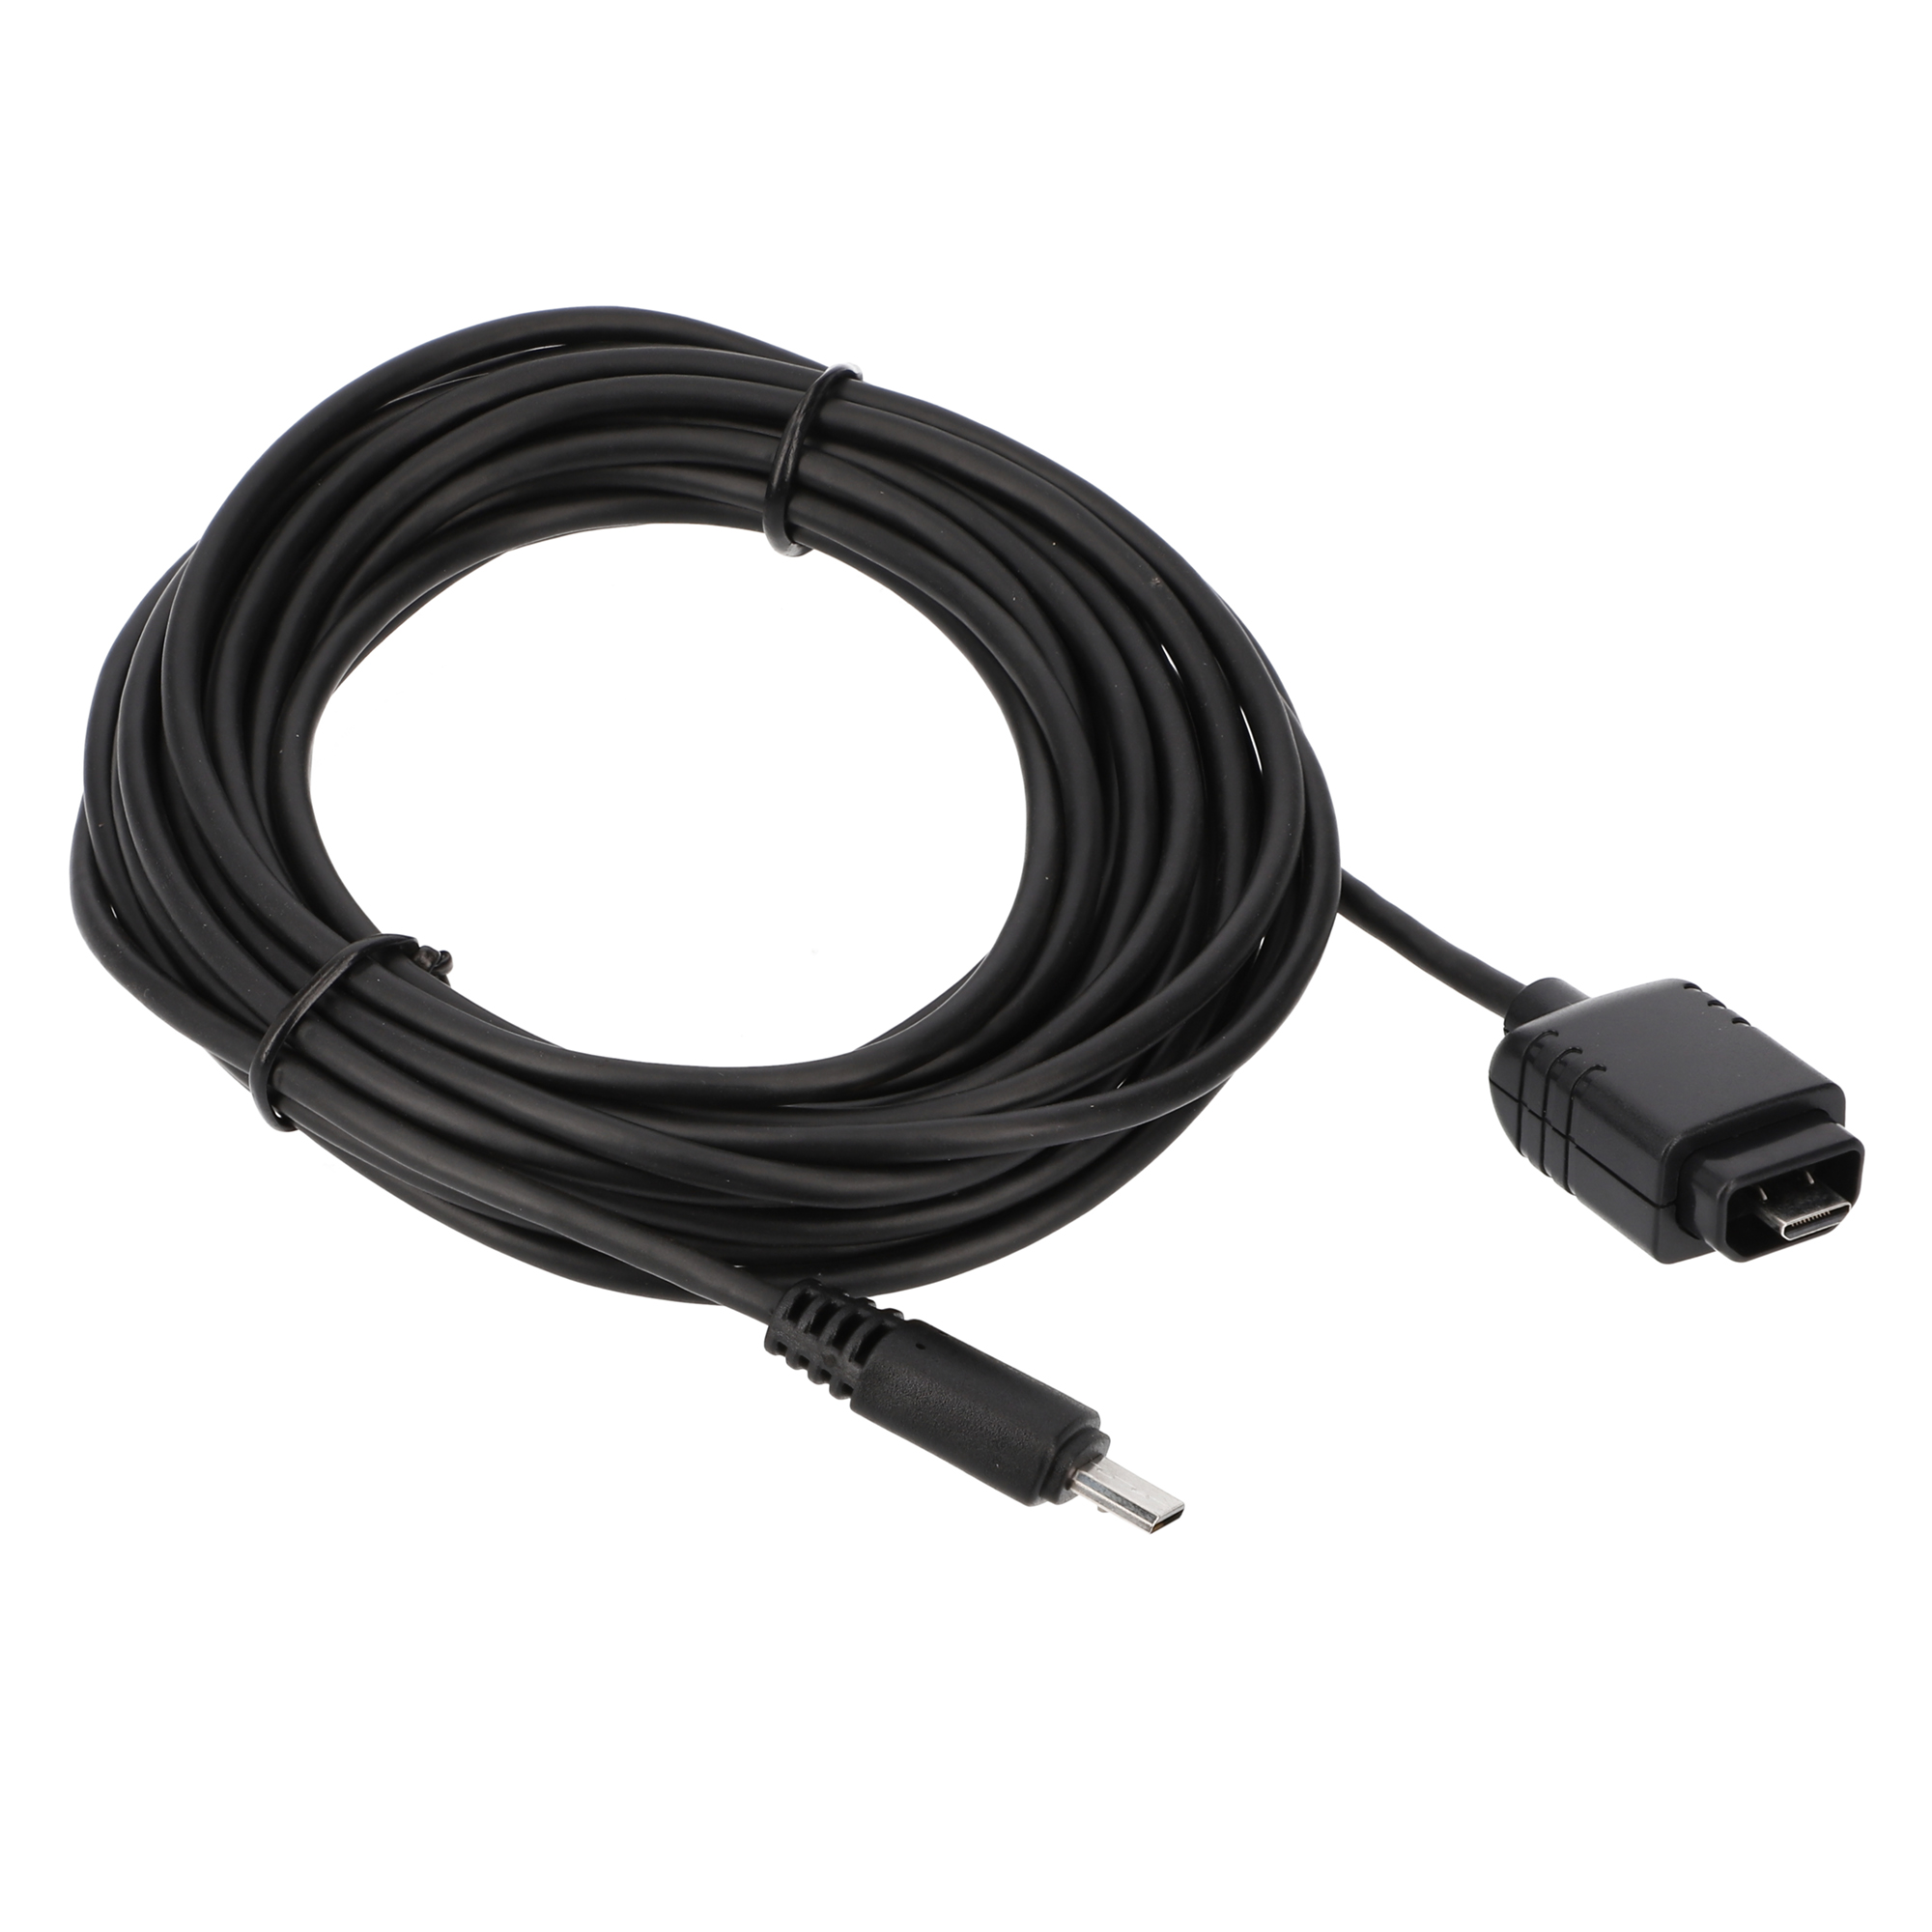 ayex VMC-MM1 USB Multi Terminal Connecting Kabel Für Sony Kamera, 5 Meter